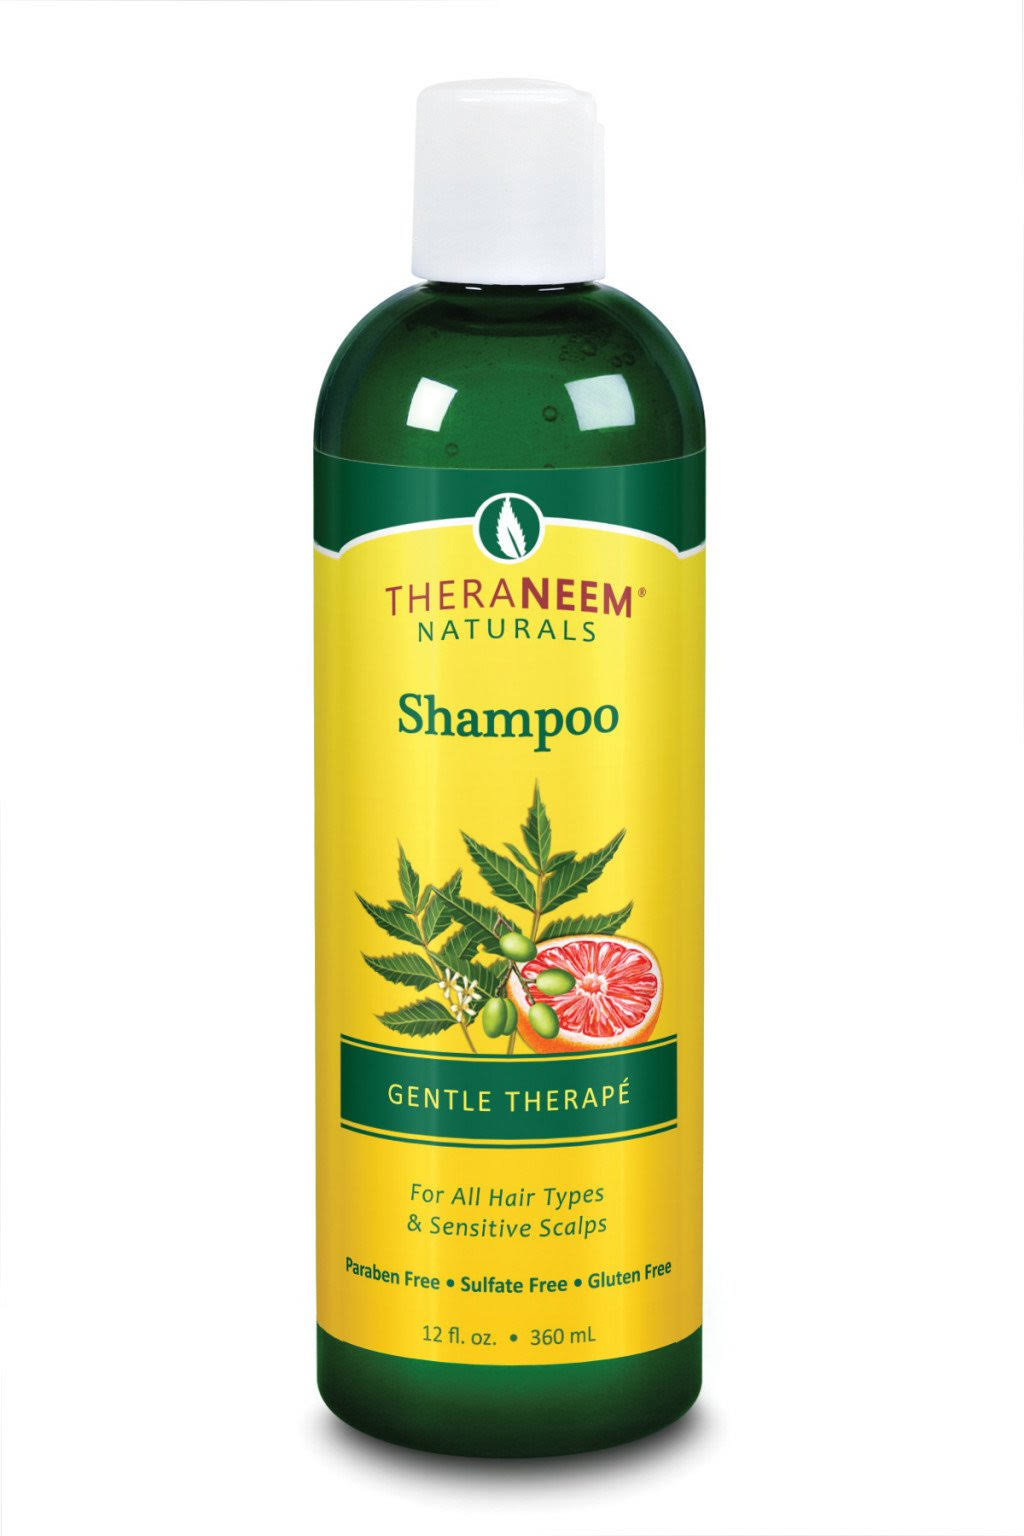 TheraNeem Organix Shampoo - Gentle Therape